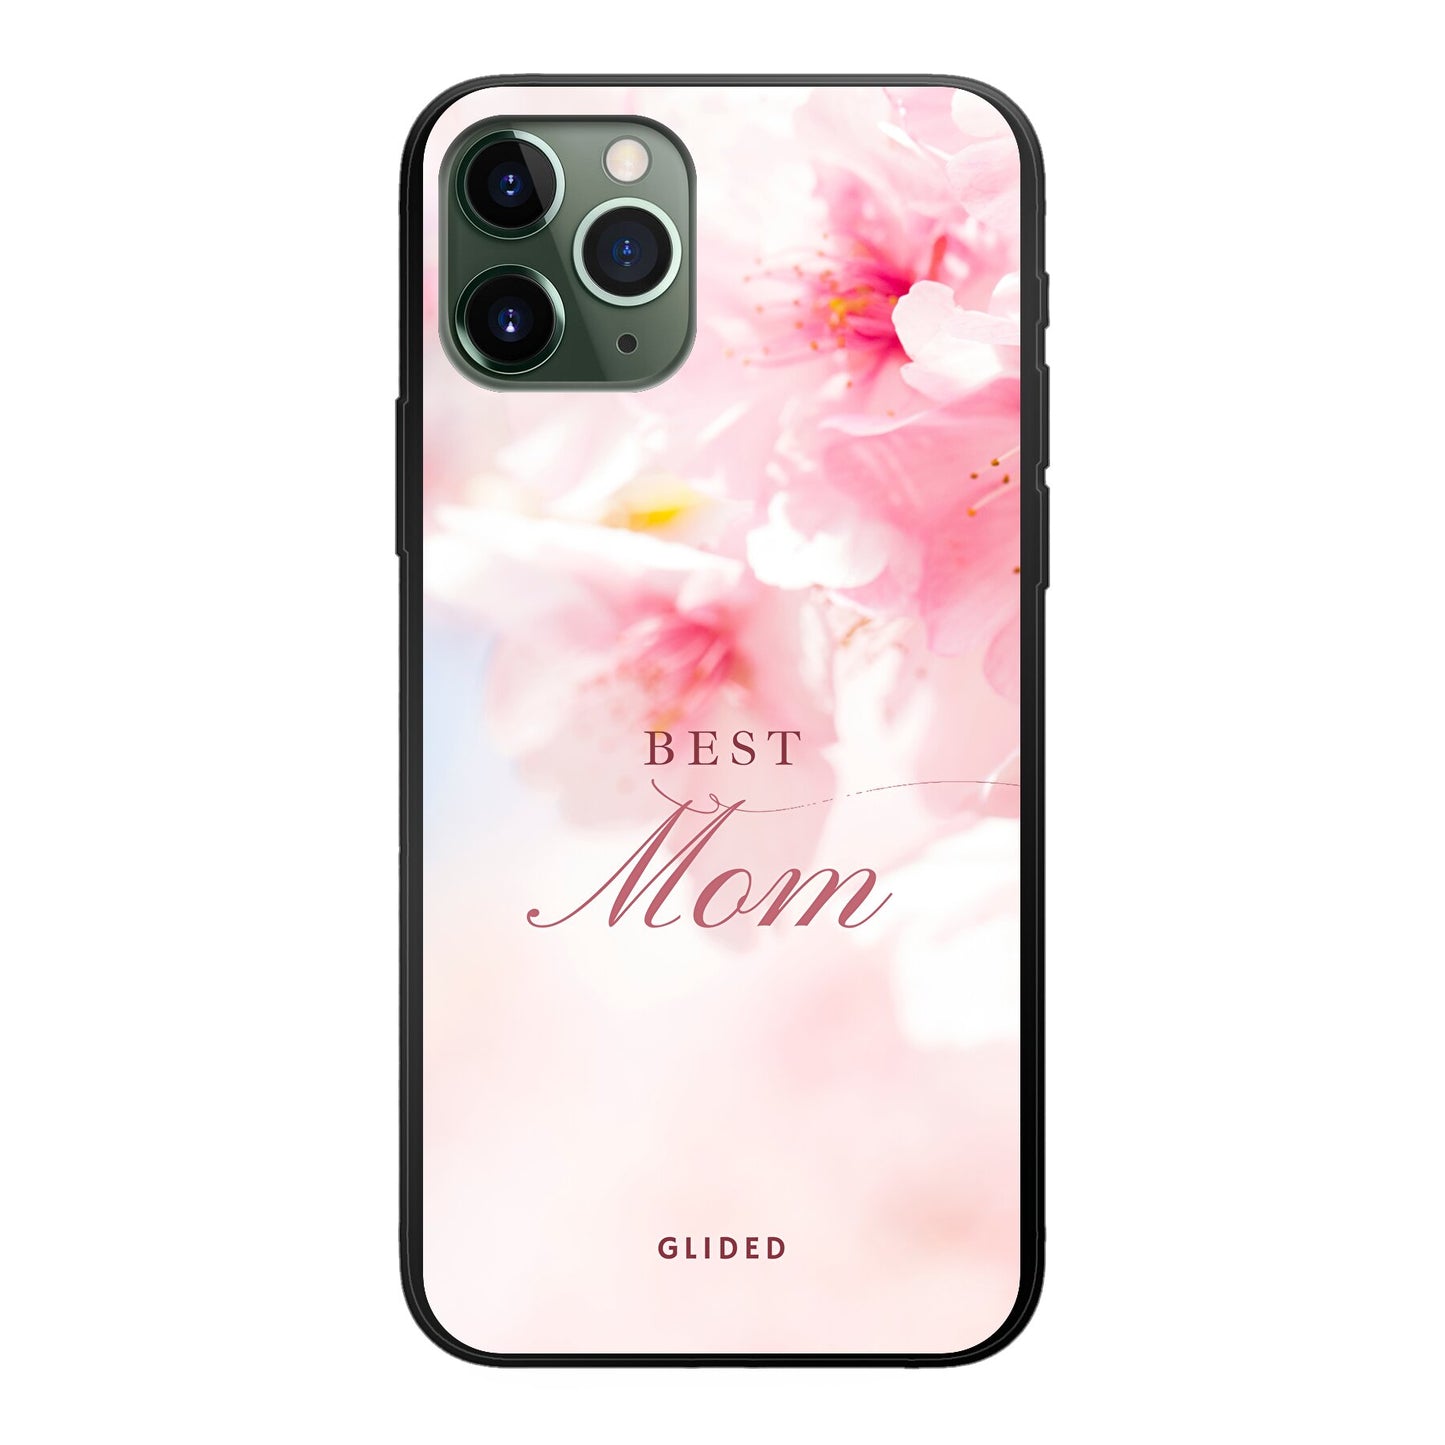 Flower Power - iPhone 11 Pro - Soft case